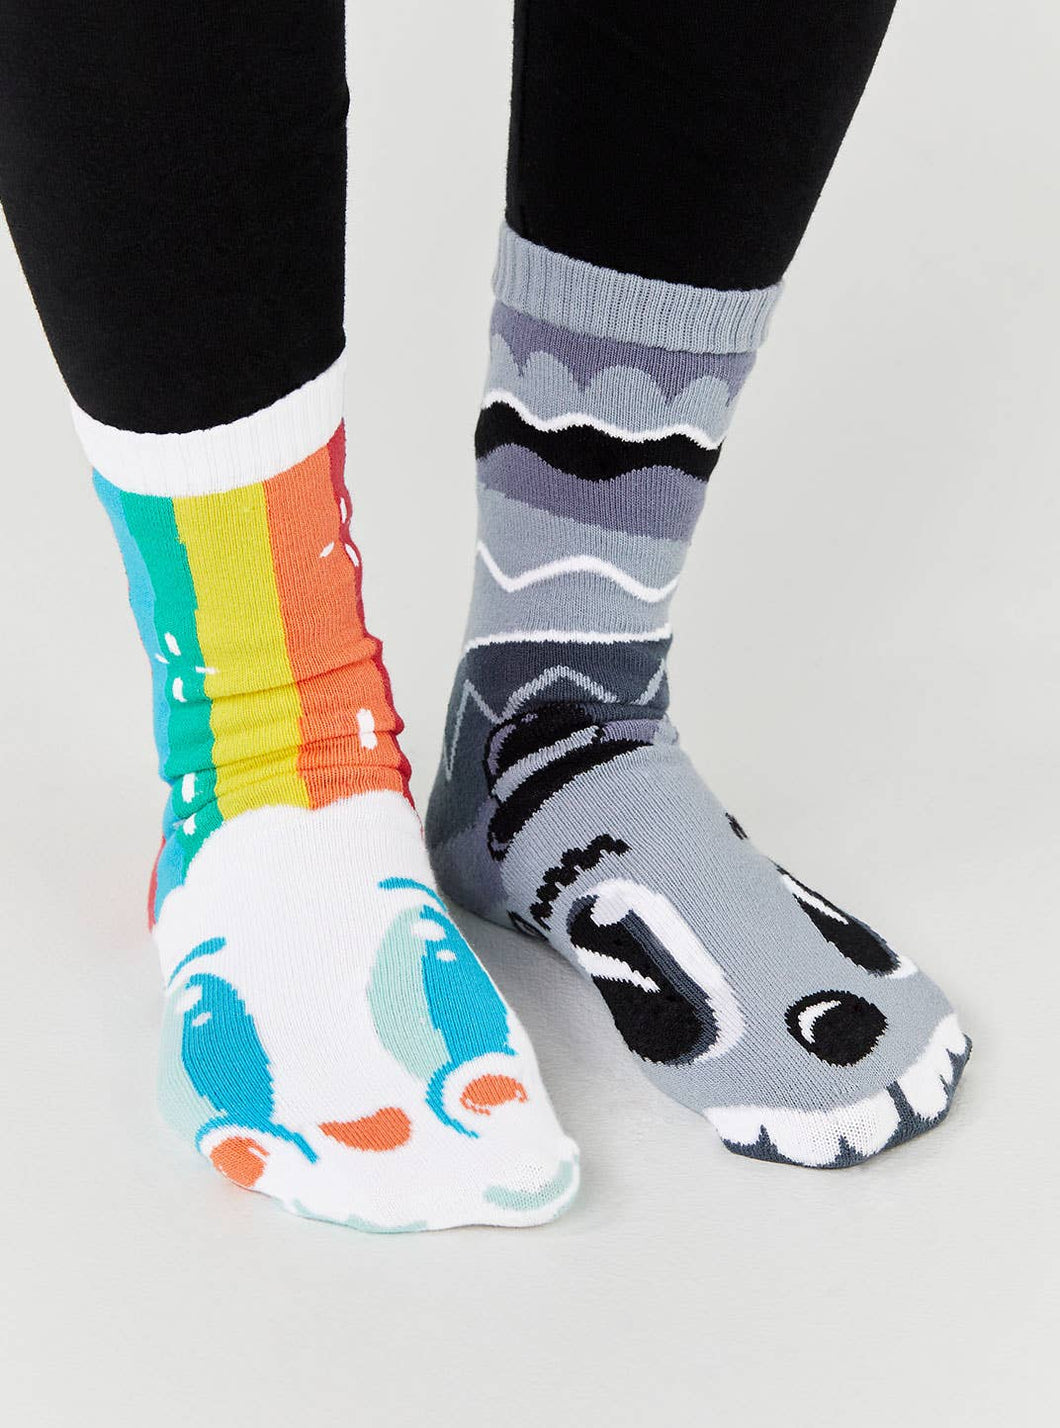 Rainbowface & Mr. Gray | Adult Socks by Nate Bear